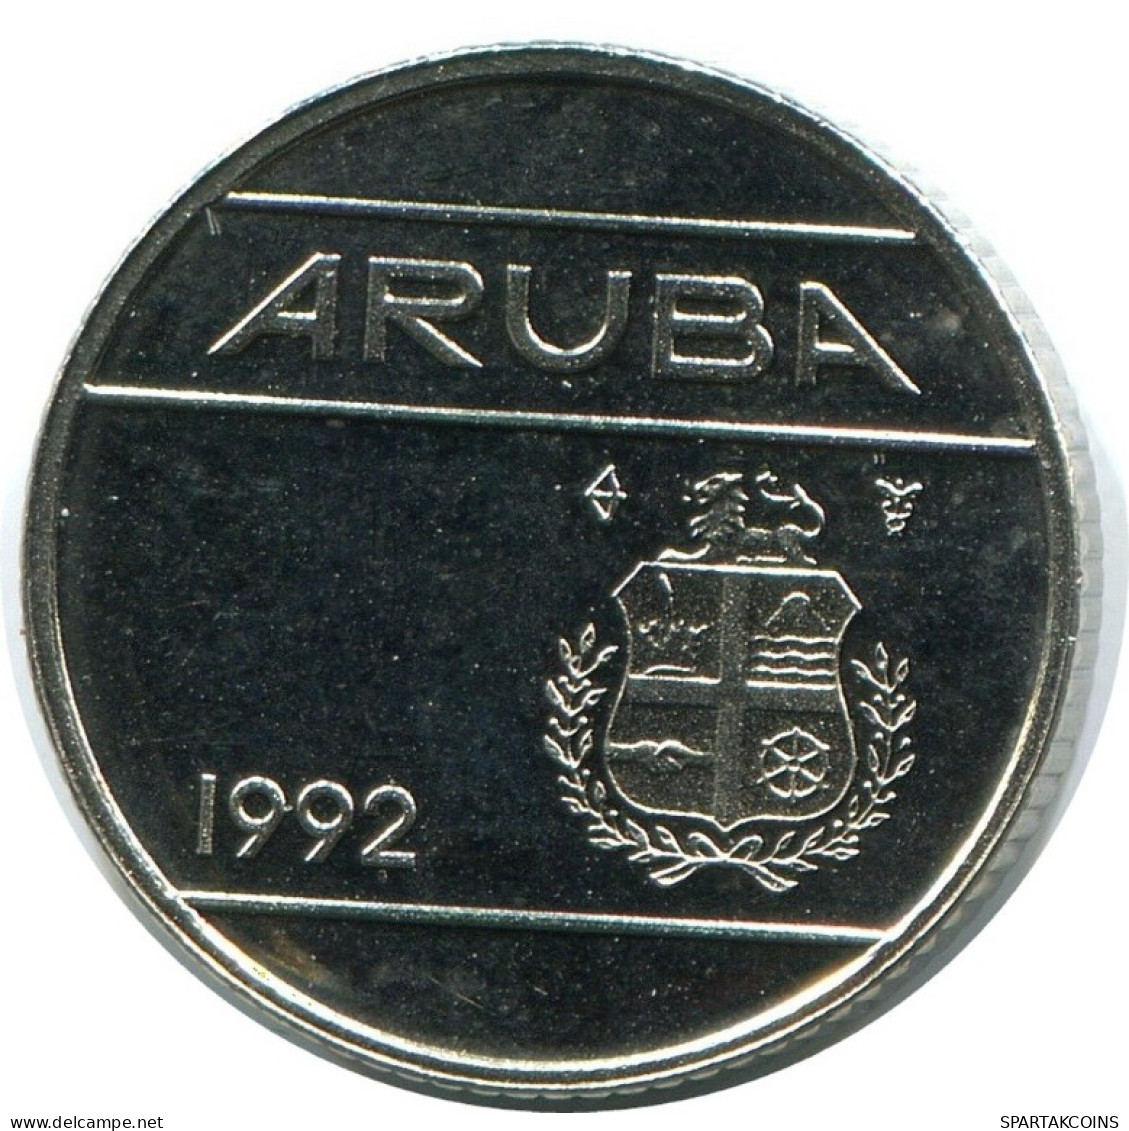 10 CENTS 1992 ARUBA Münze (From BU Mint Set) #AH078.D.A - Aruba